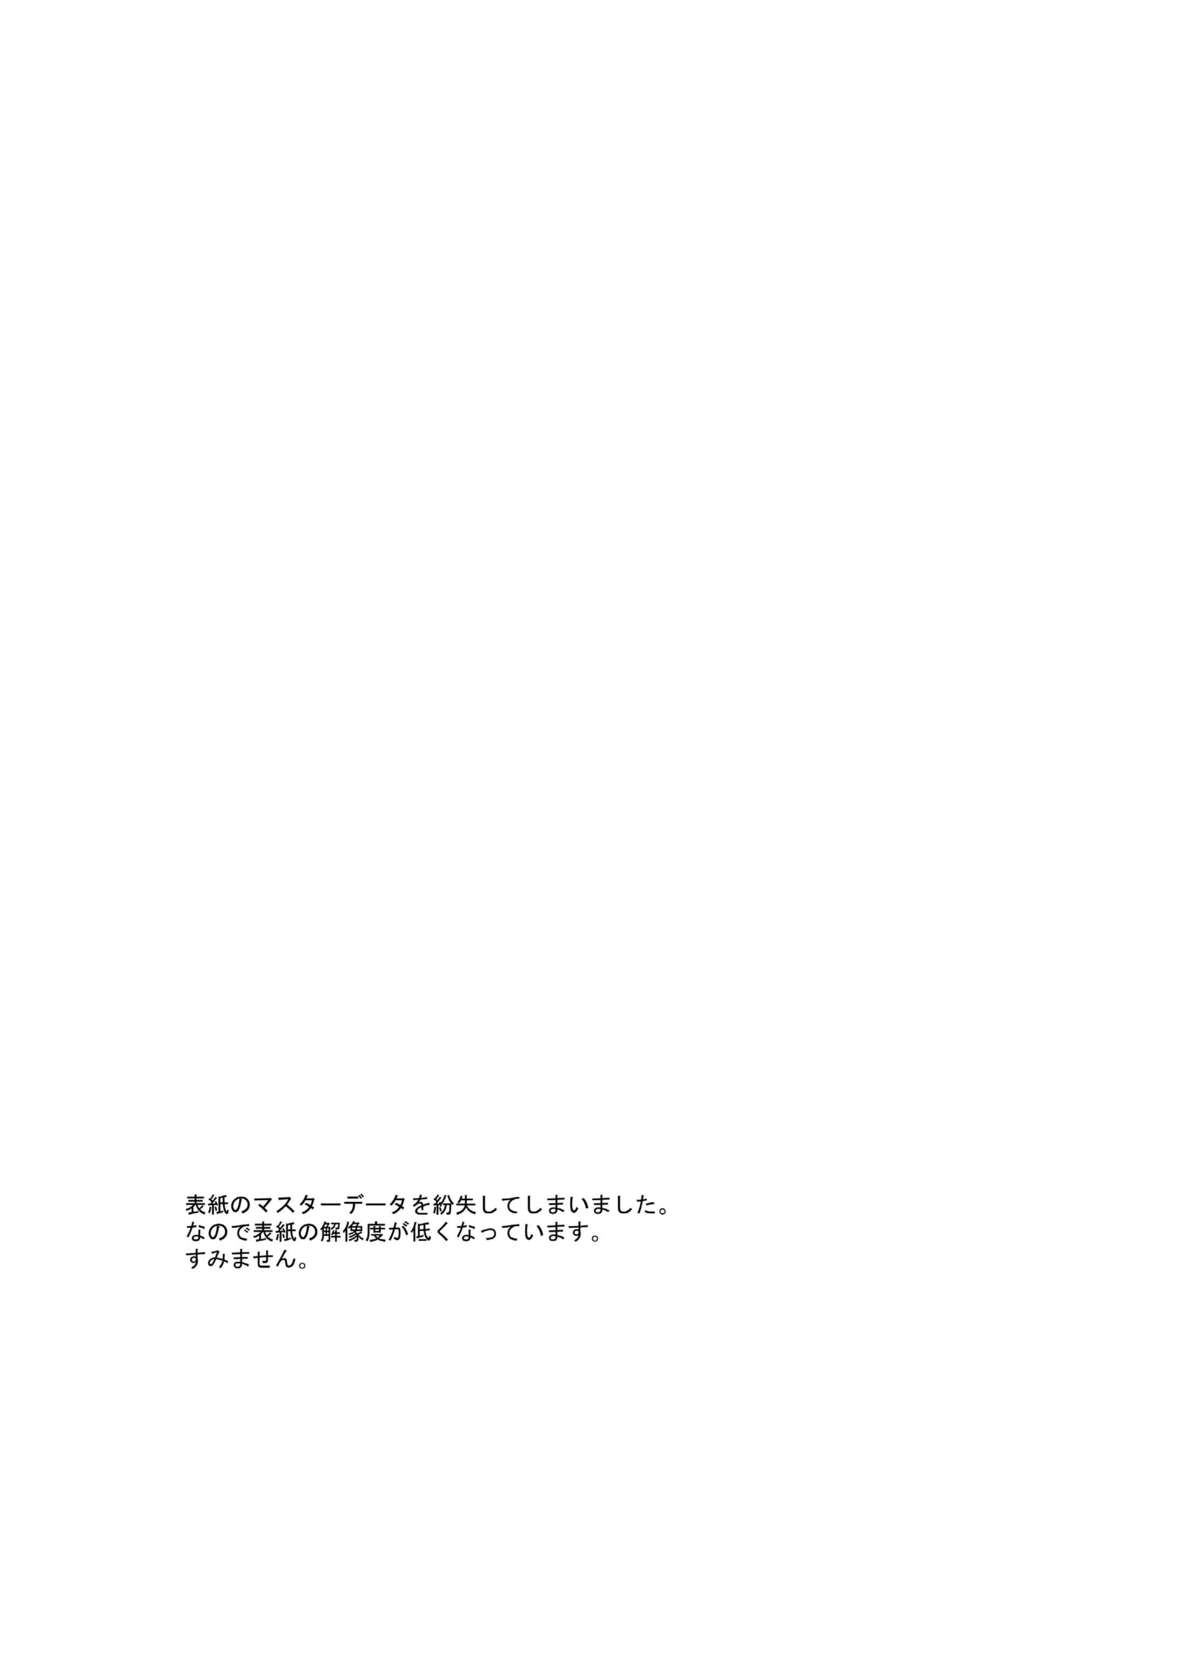 (2011-06-02) (同人誌) [踝会] ローゼン本 総集編 [RJ078469] (画像化済)